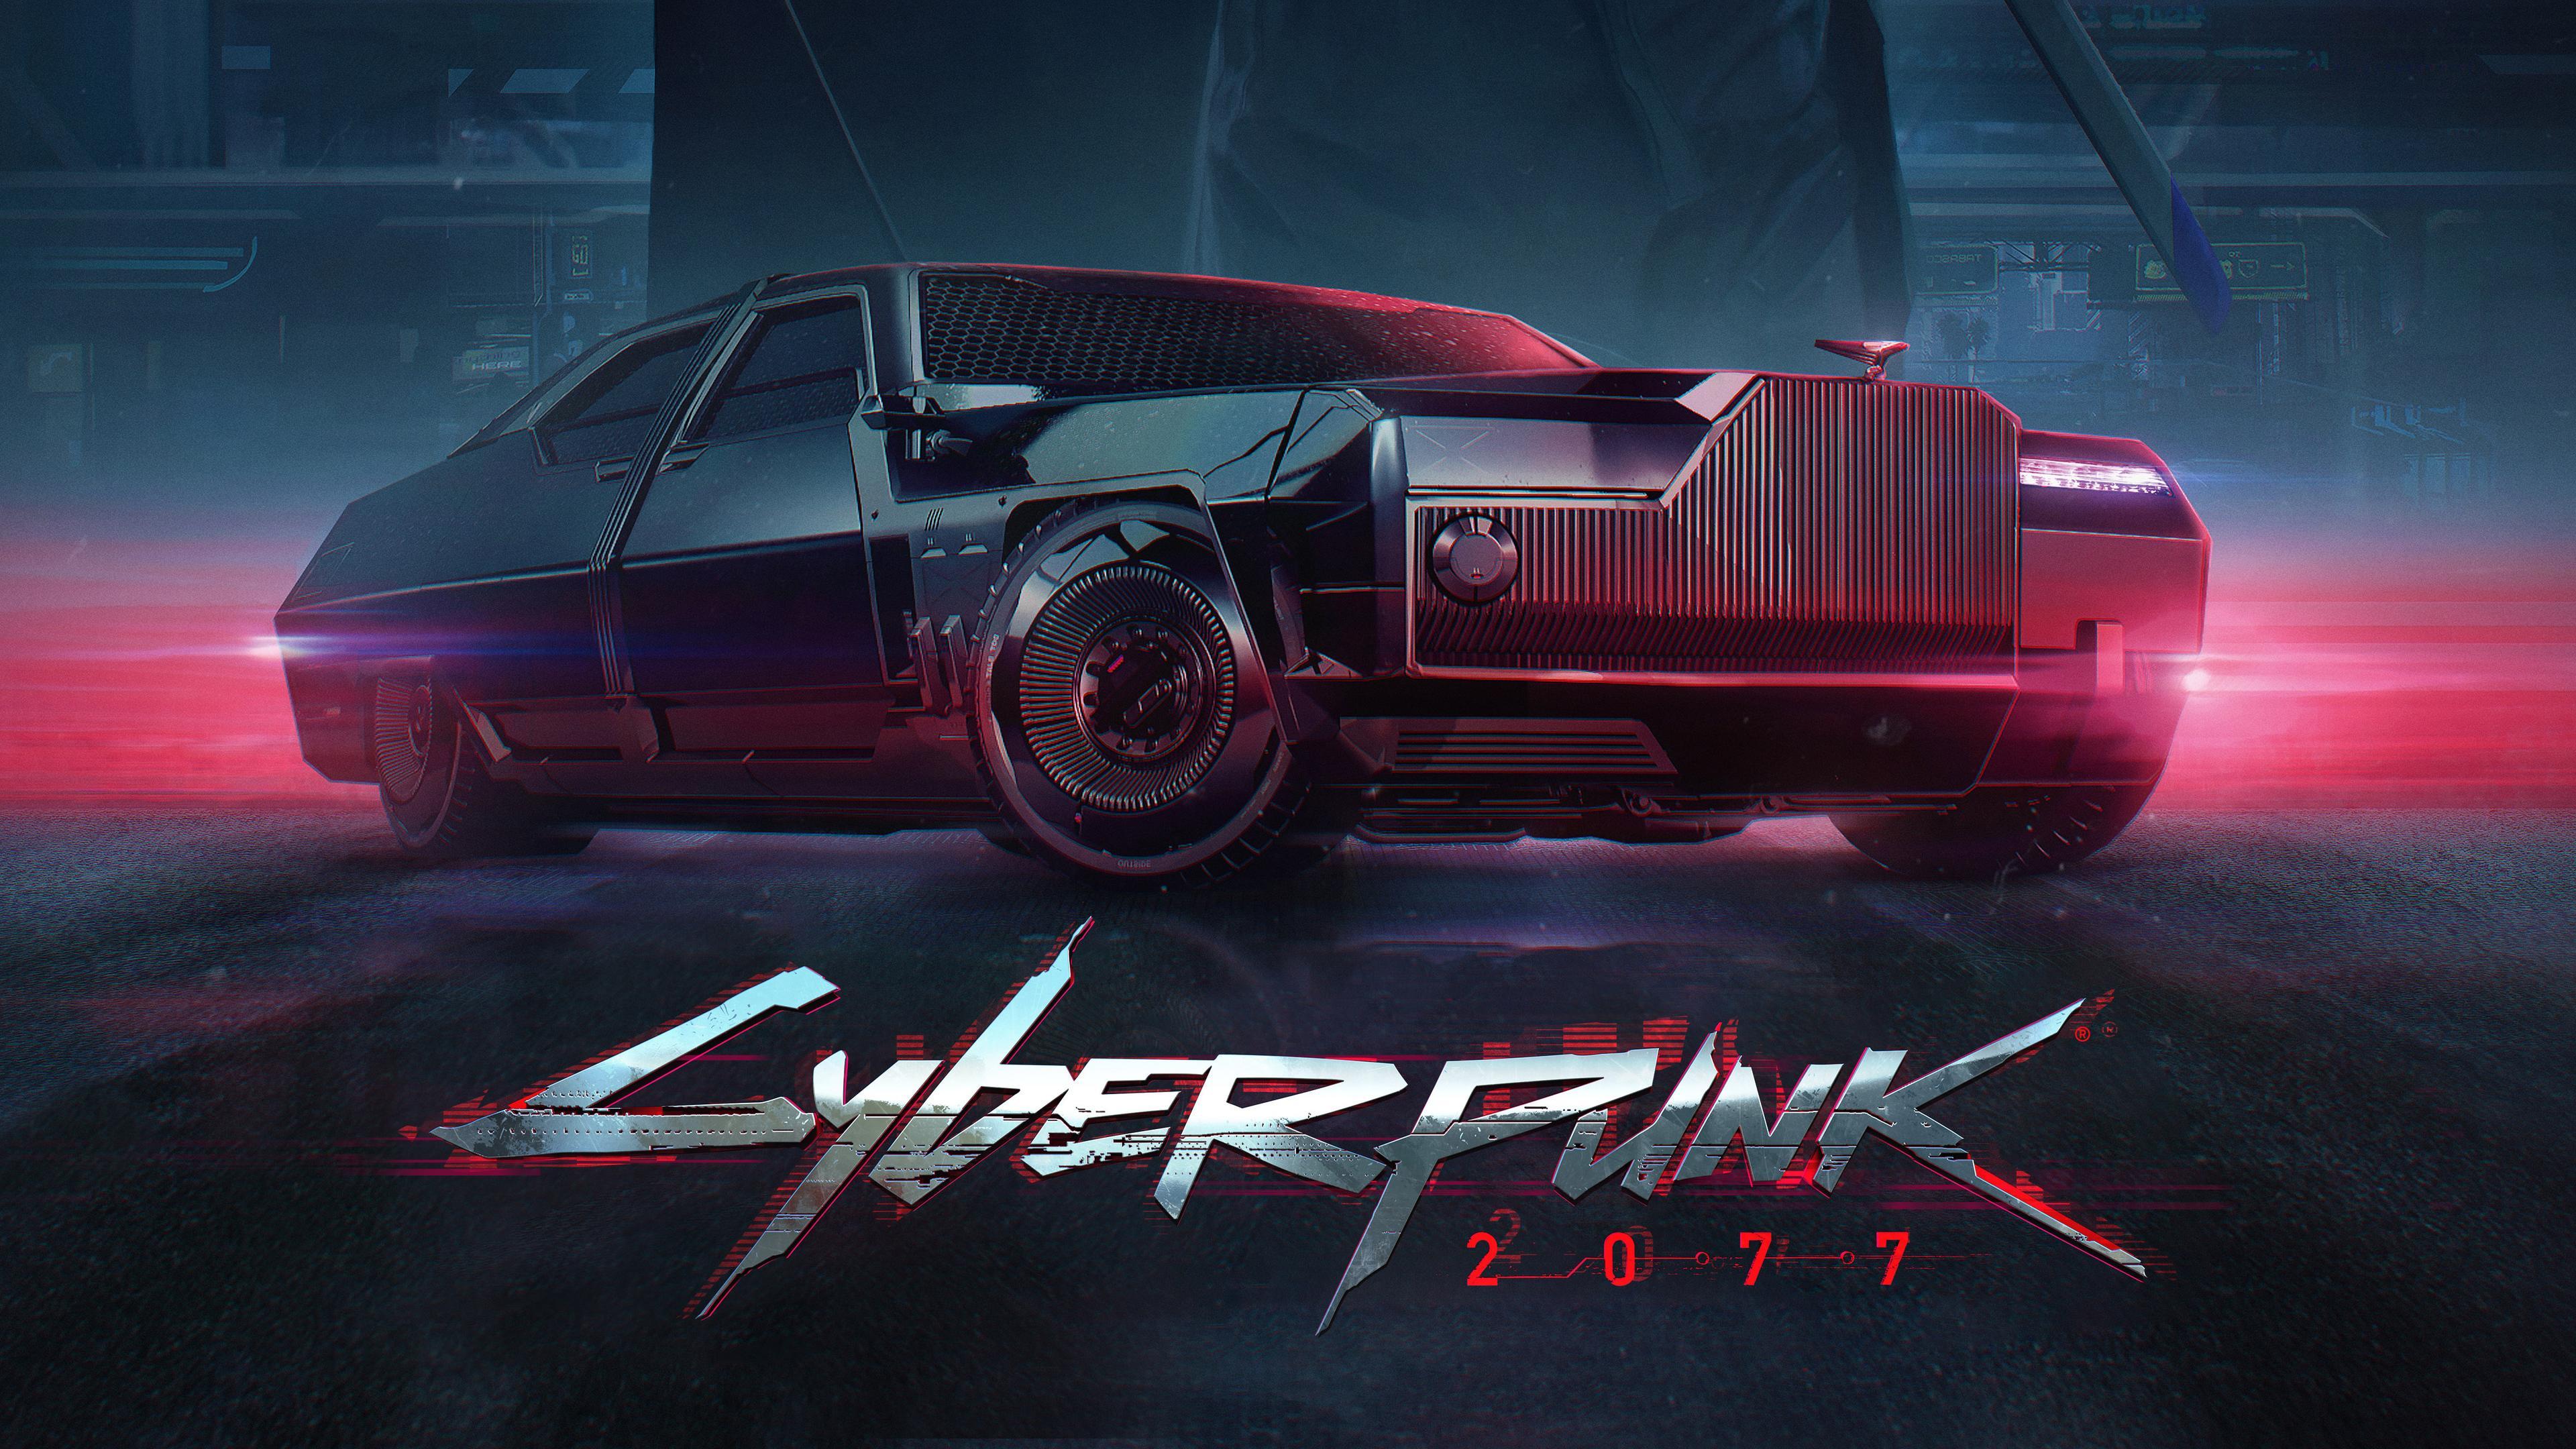 Wallpapers 4k Cyberpunk 2077 Poster 2019 games wallpapers, 4k